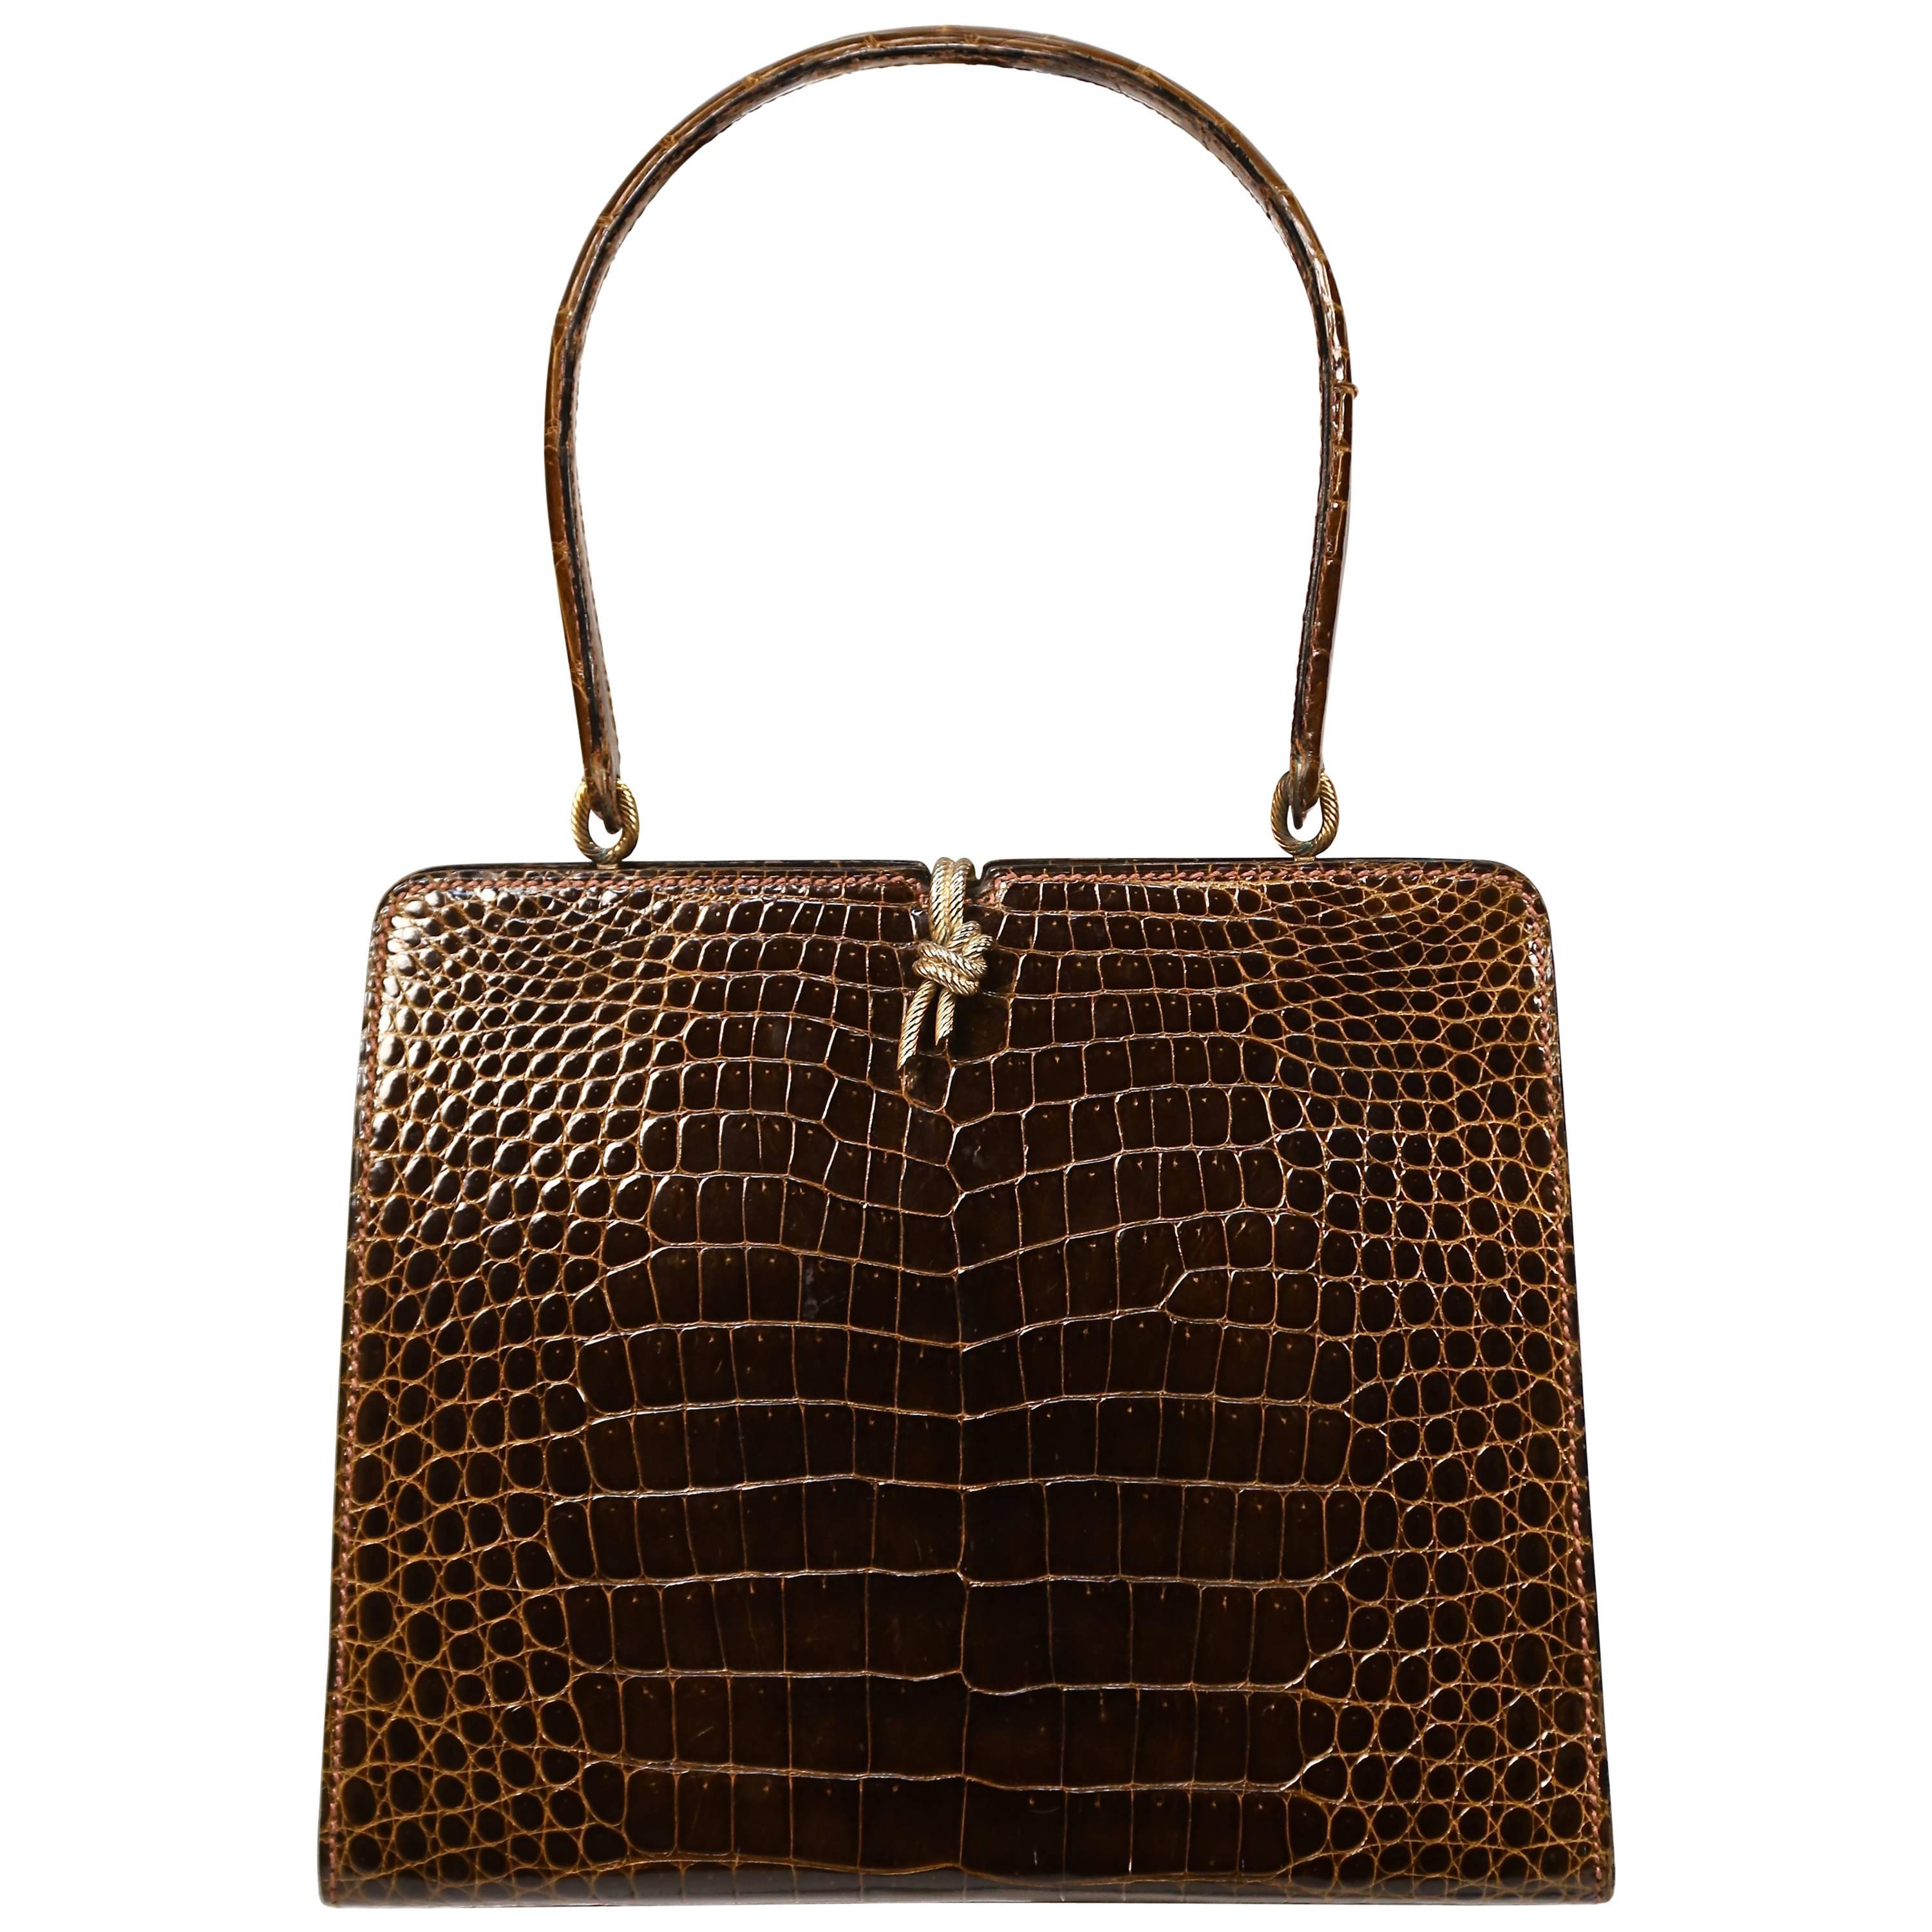 1960's LOEWE brown crocodile leather top handle bag with gilt hardware